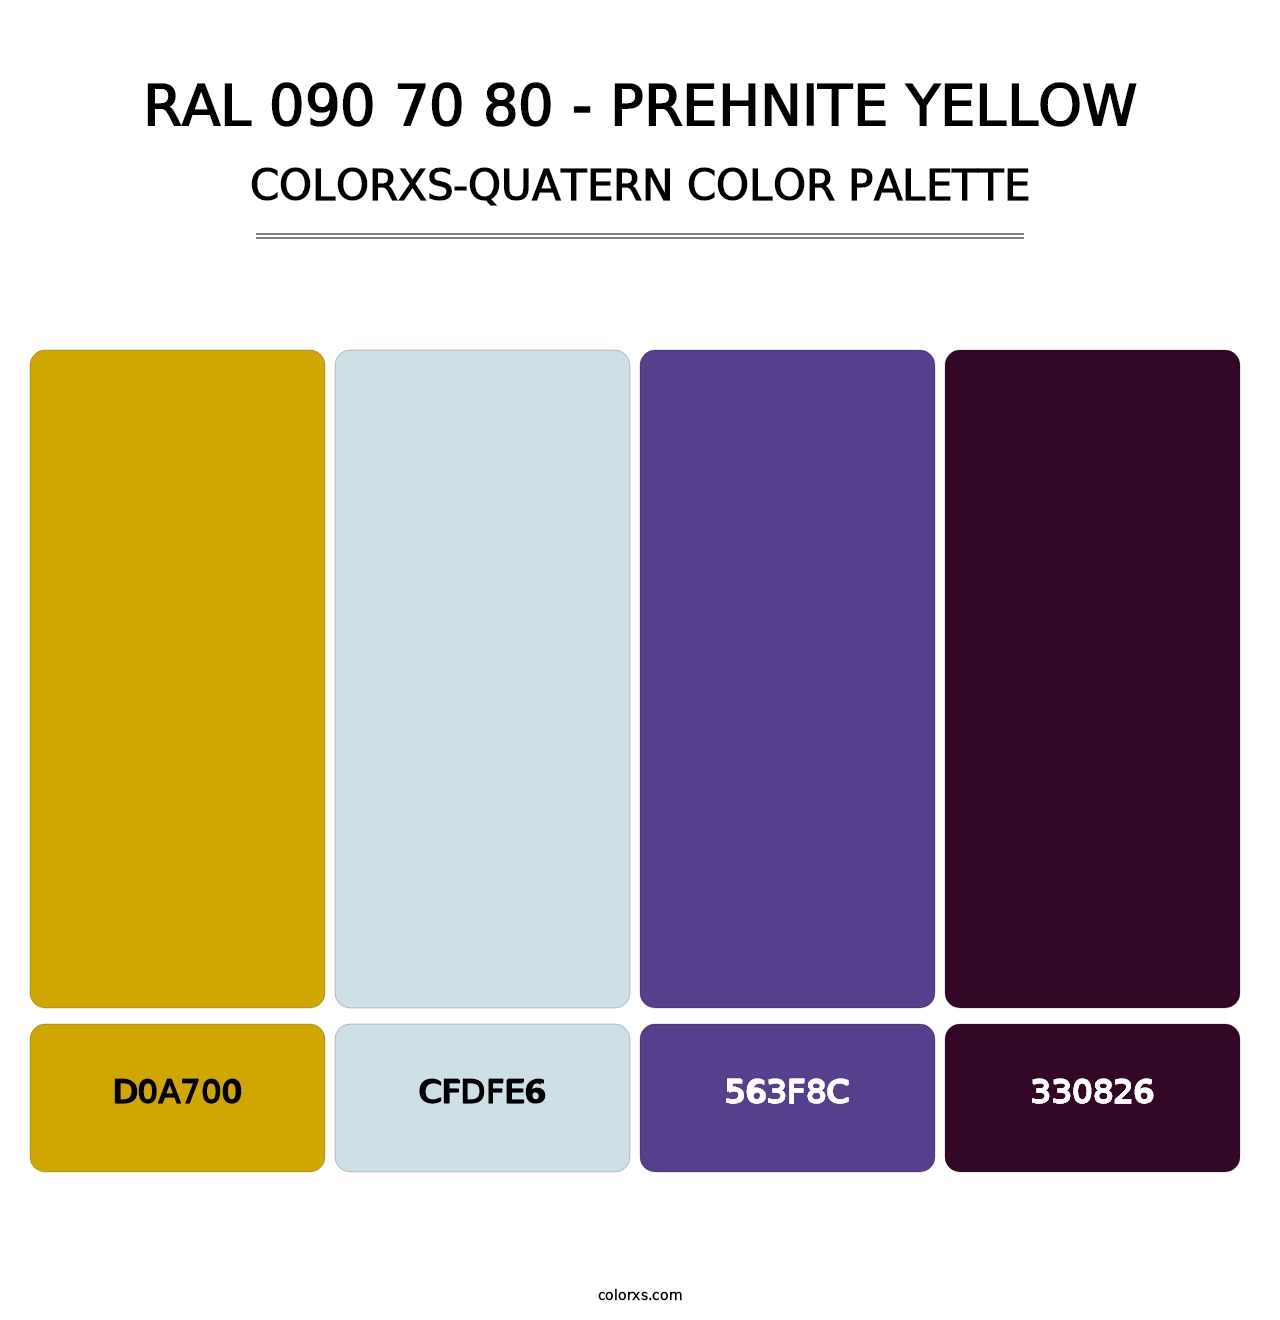 RAL 090 70 80 - Prehnite Yellow - Colorxs Quatern Palette